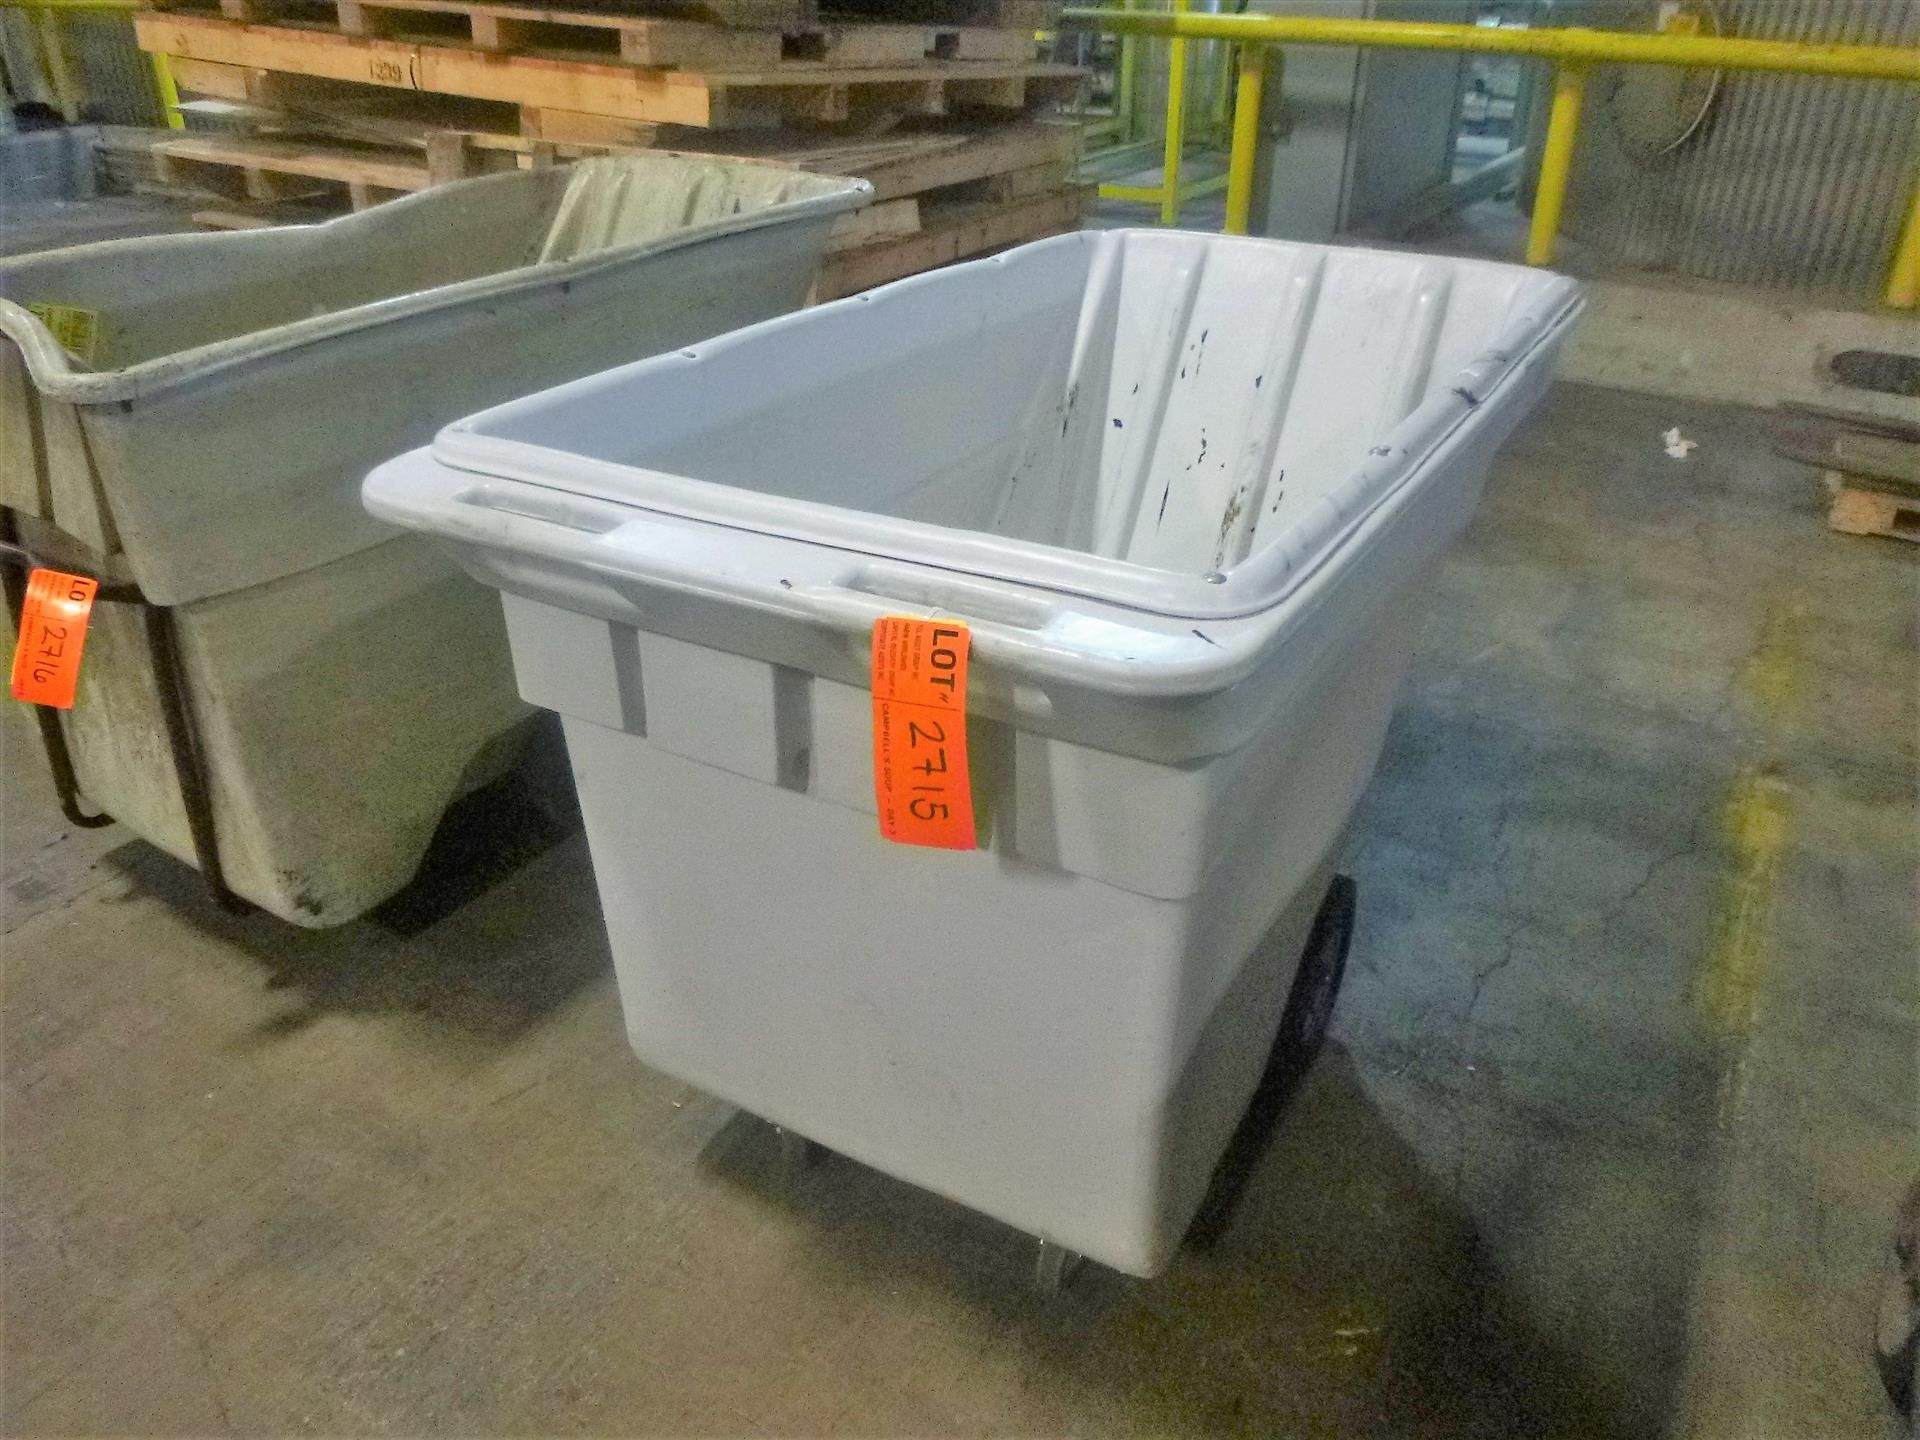 tilting dumpster on casters, 1 CU. YD, plastic. [Warehouse, 1st Floor]